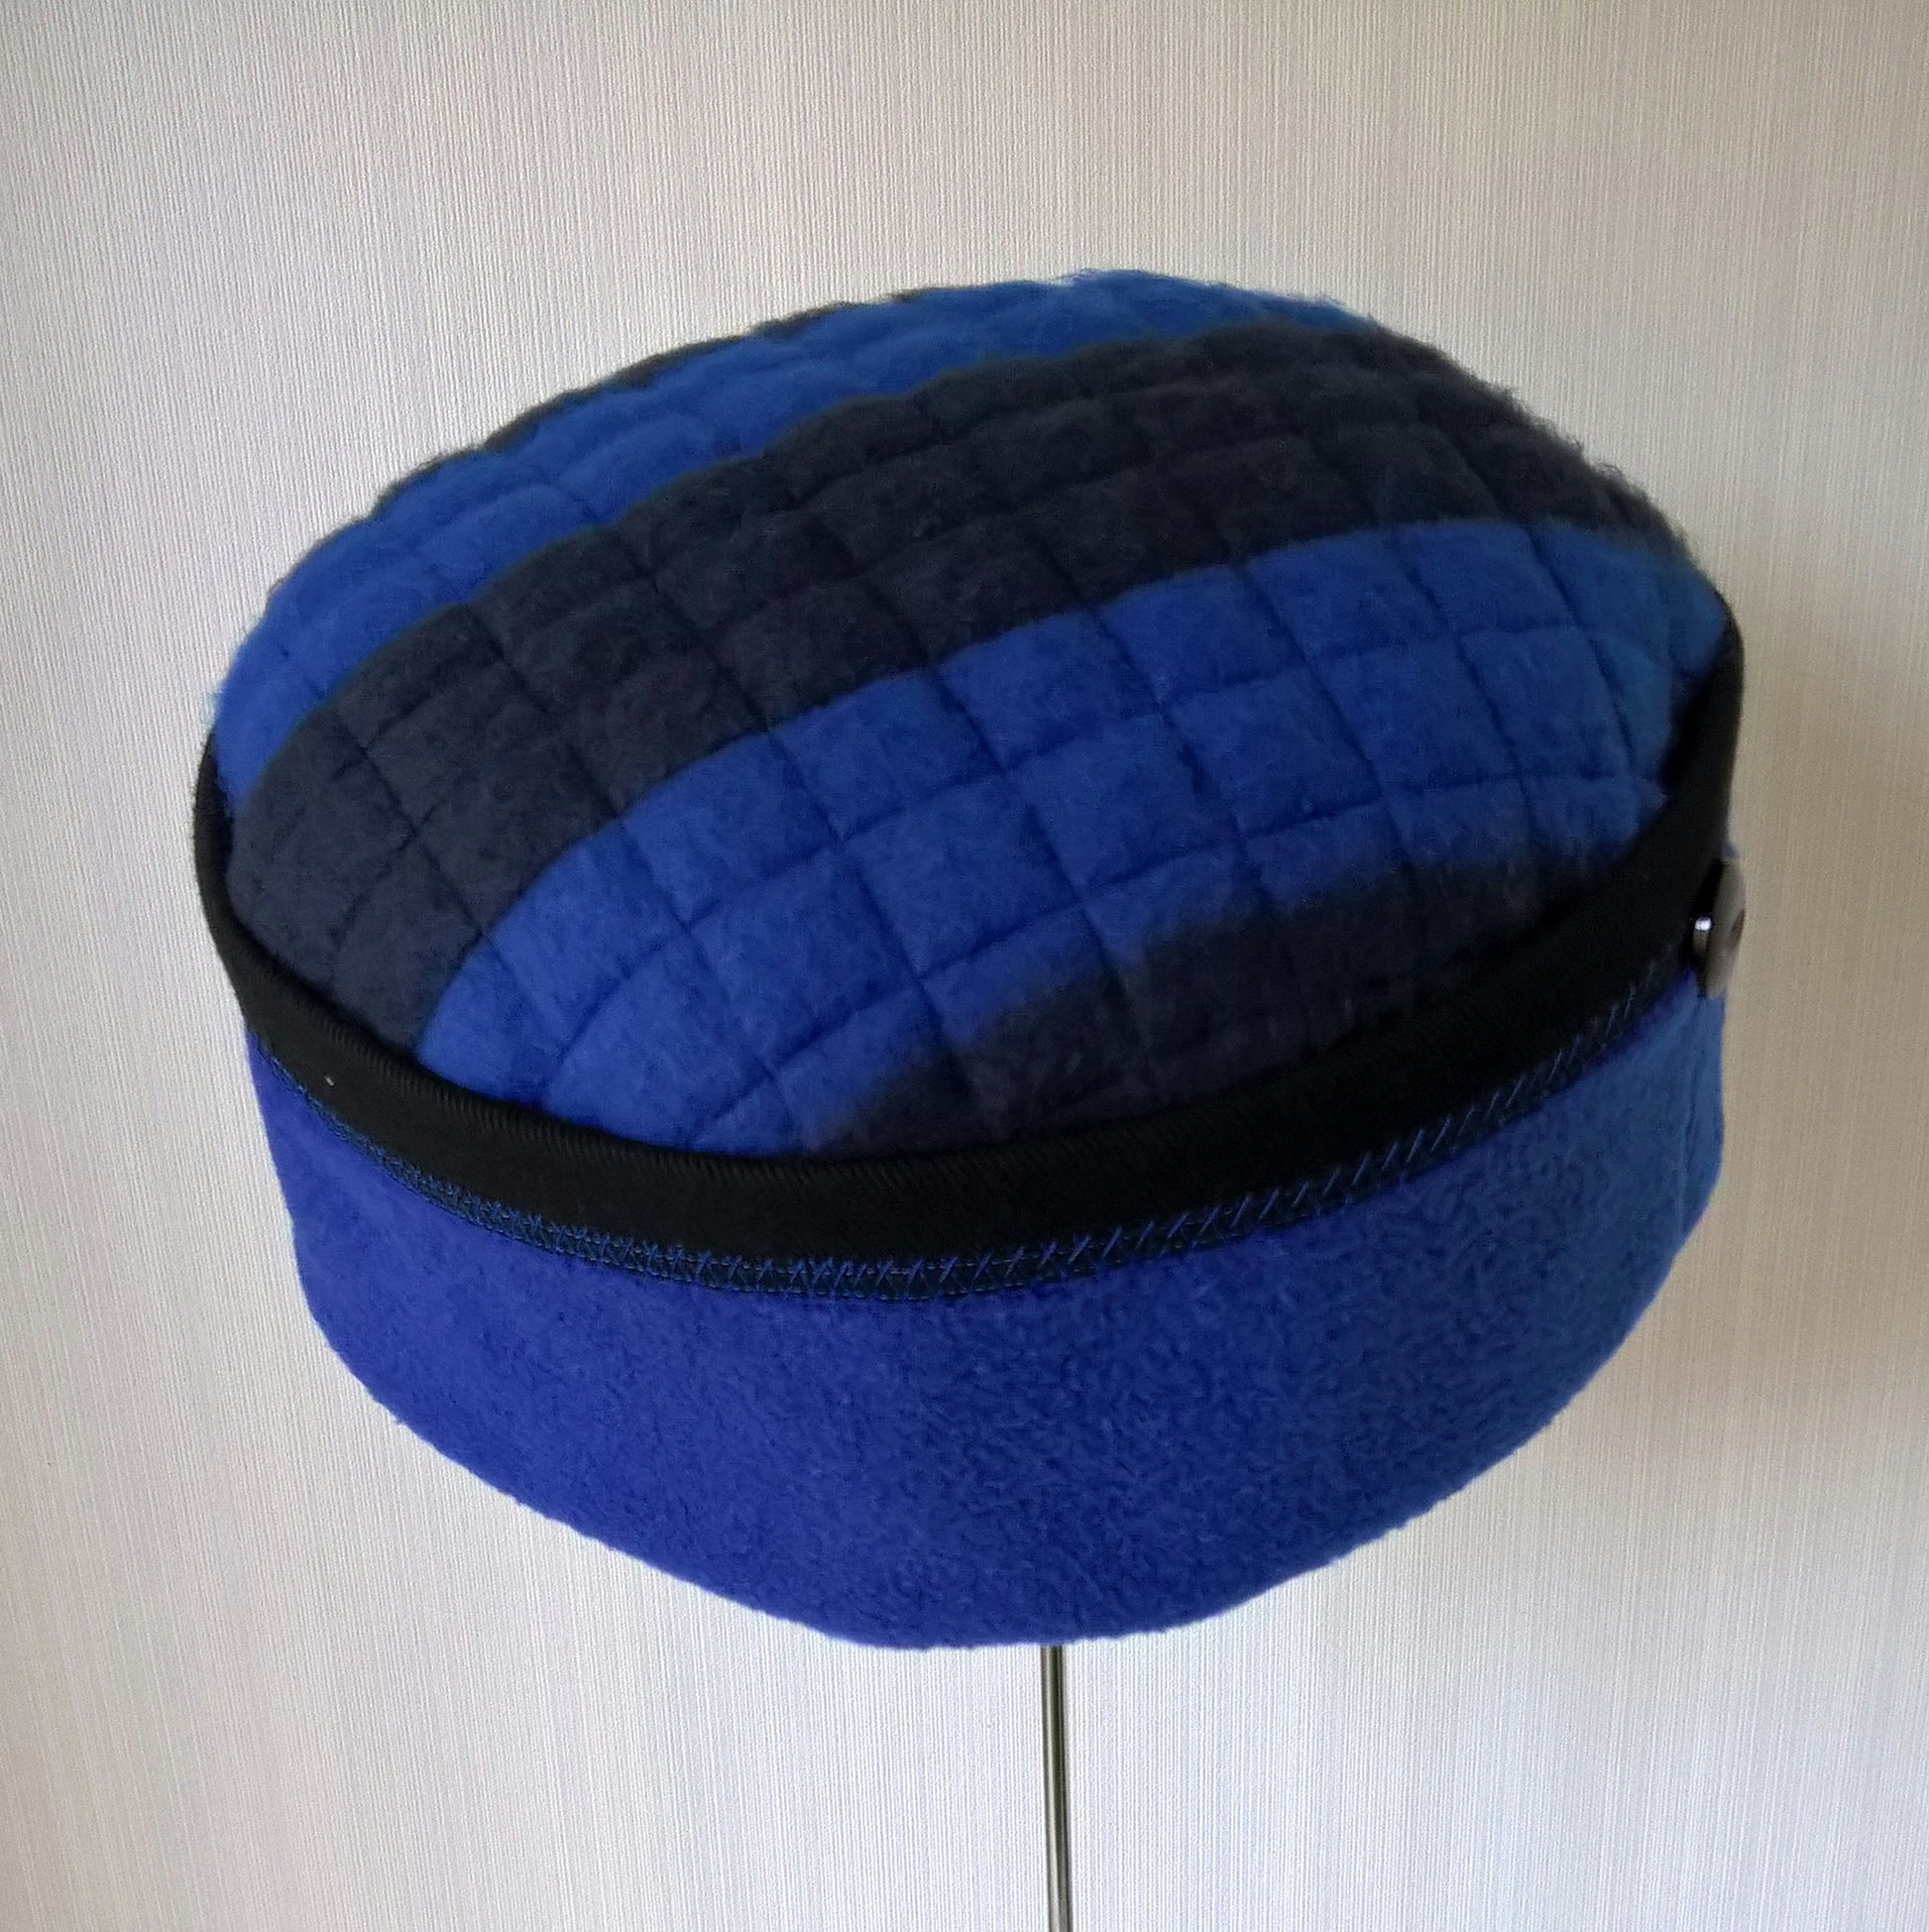 This vibrant cobalt blue hat has black stripes on the tip